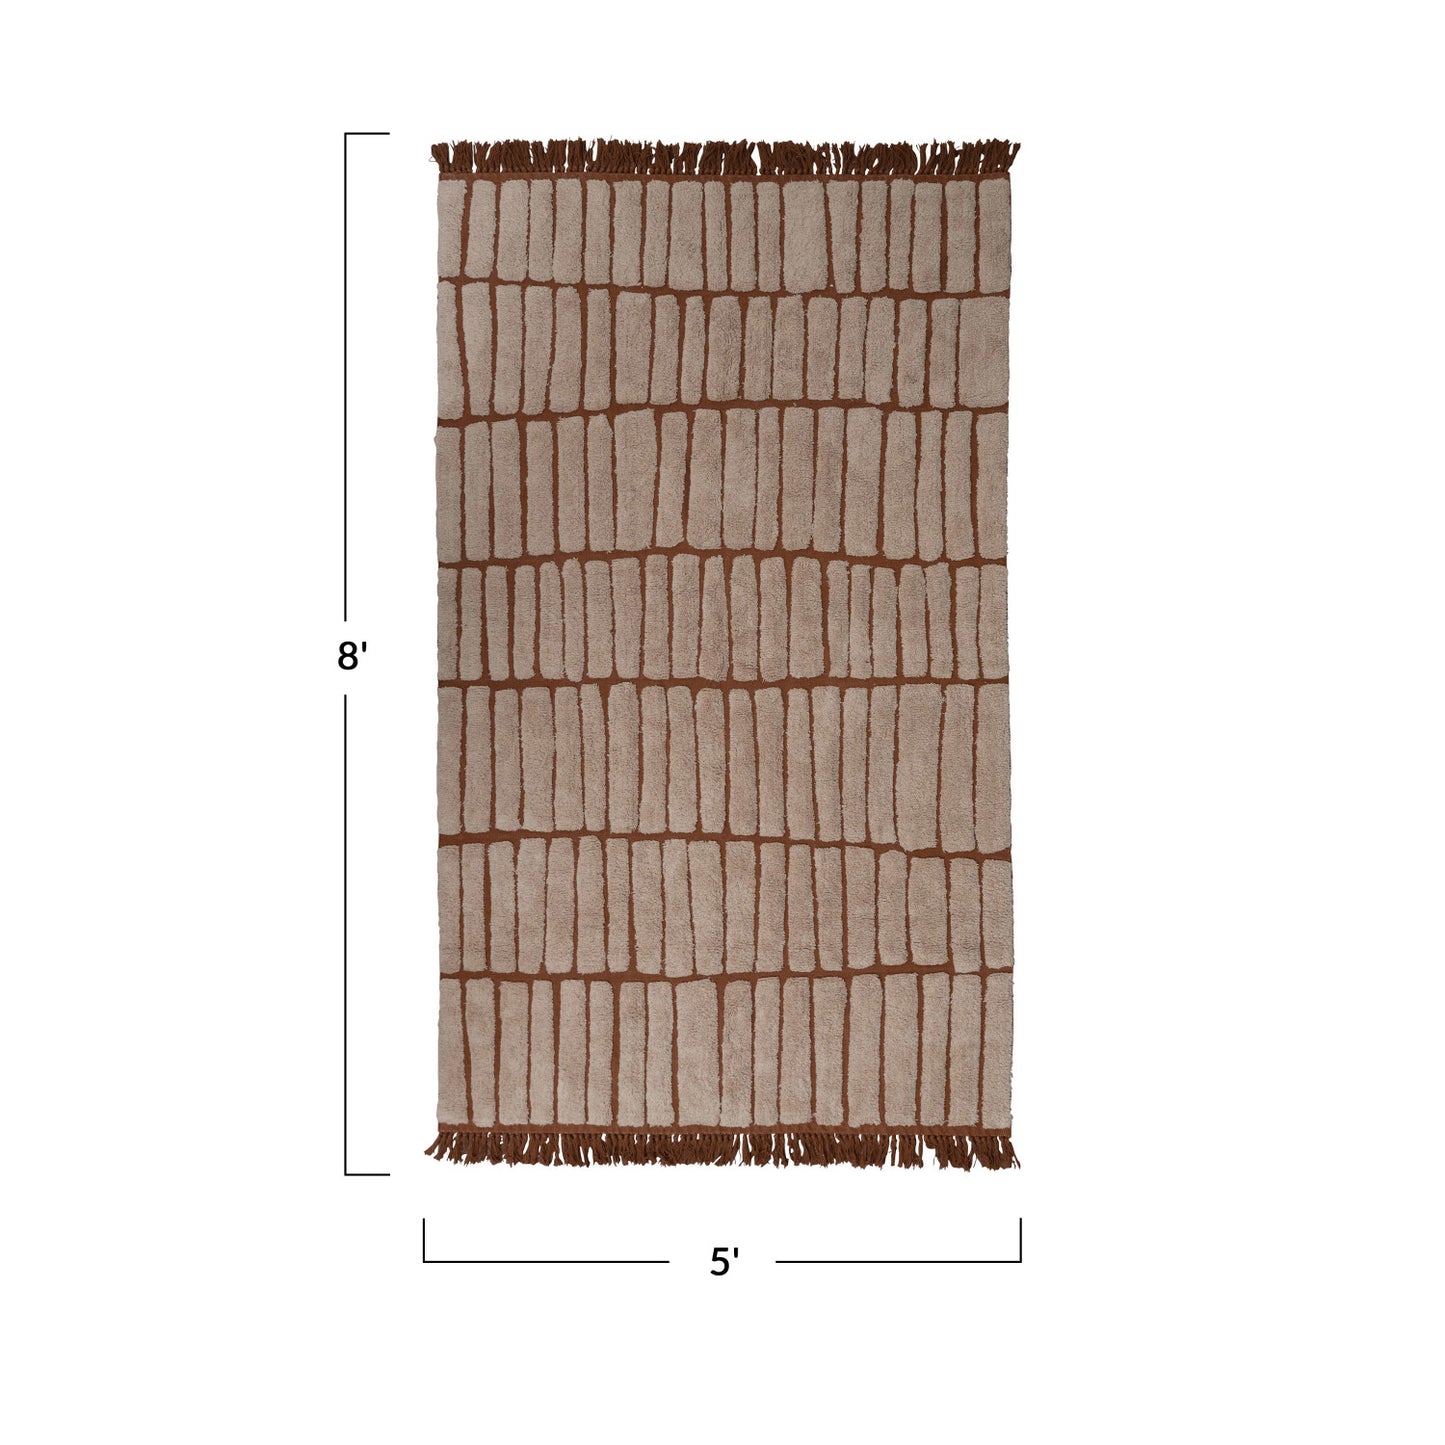 5' x 8' Cotton Tufted Rug w/ Block Design & Fringe, Sienna & Cream Color